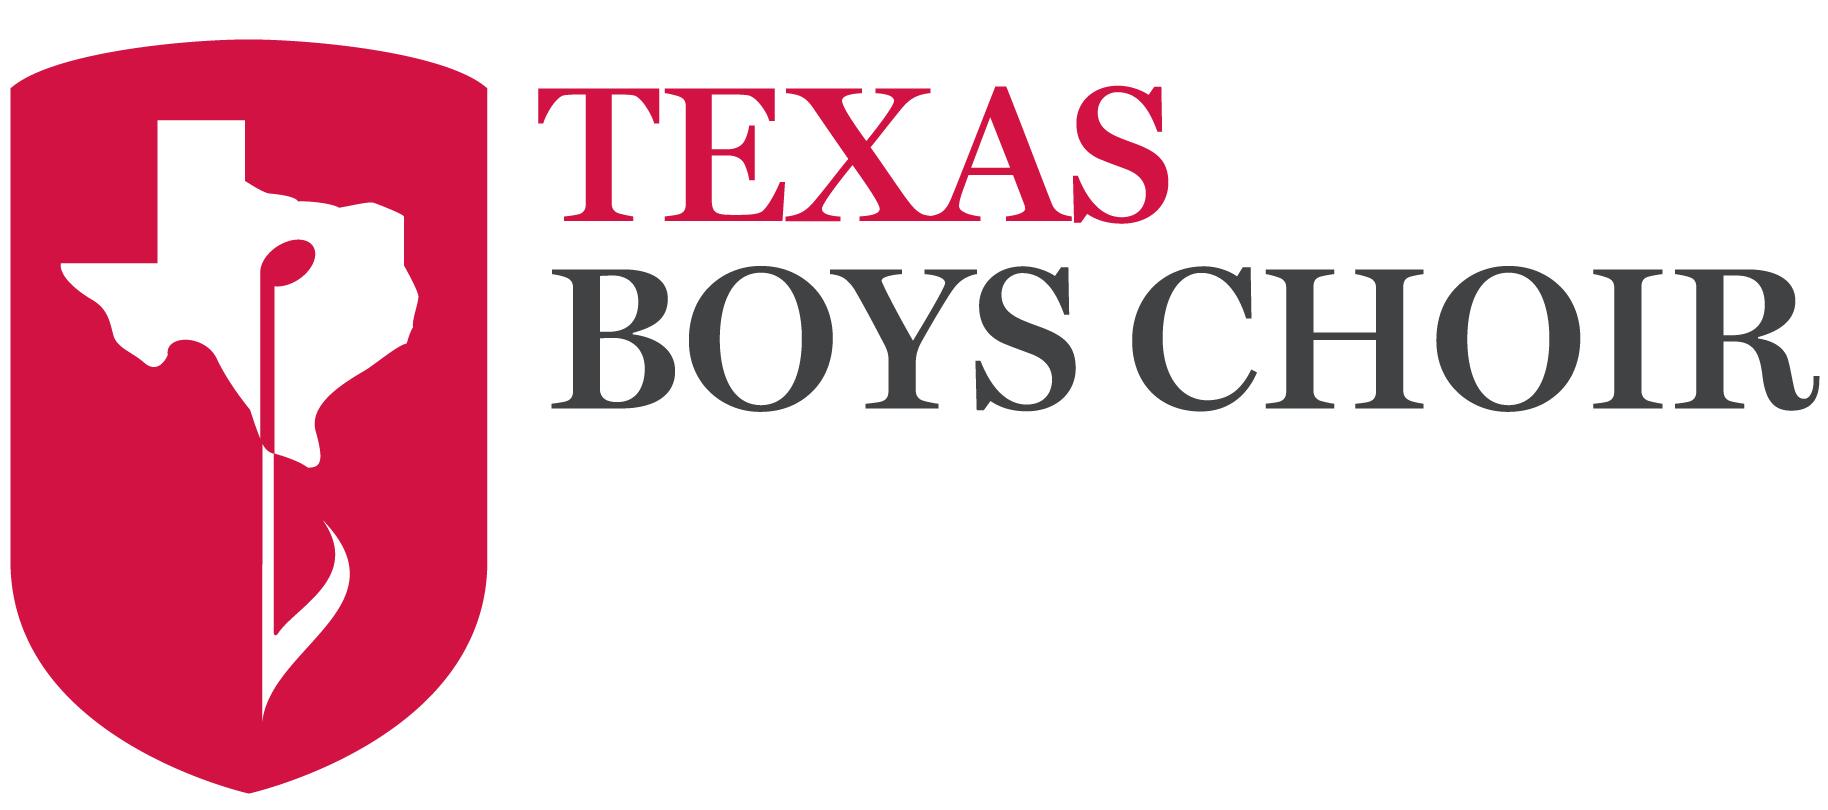 Texas Boys Choir Homepage